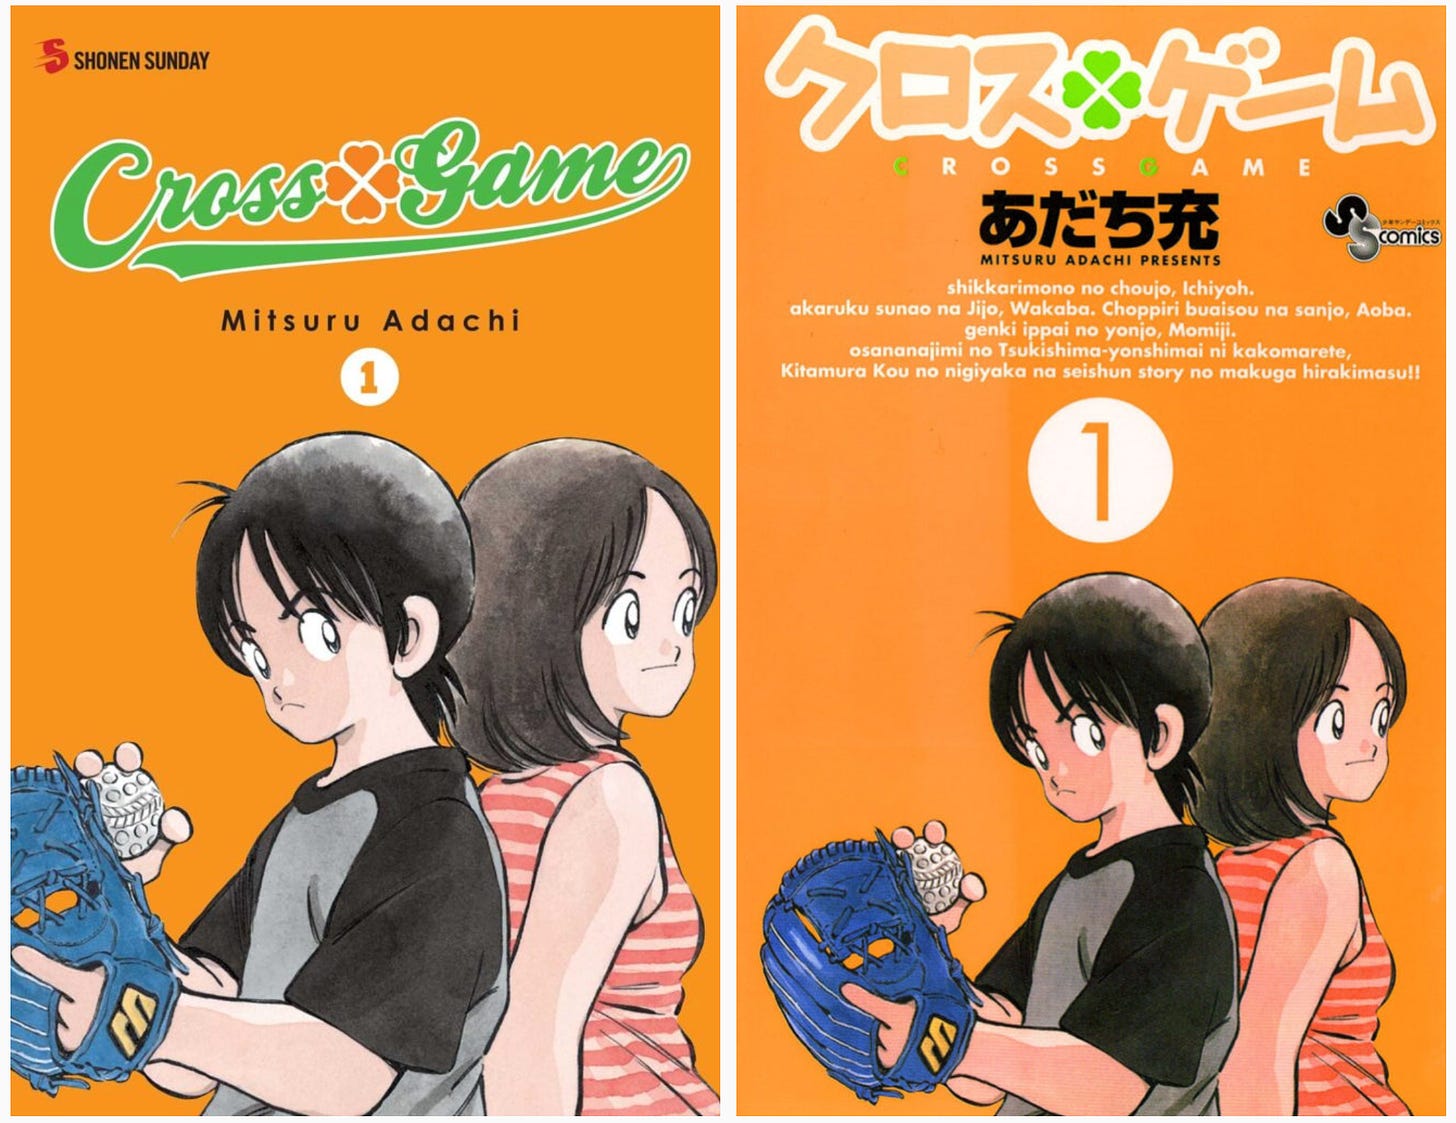  Komi Can't Communicate, Vol. 1 eBook : Oda, Tomohito: Kindle  Store